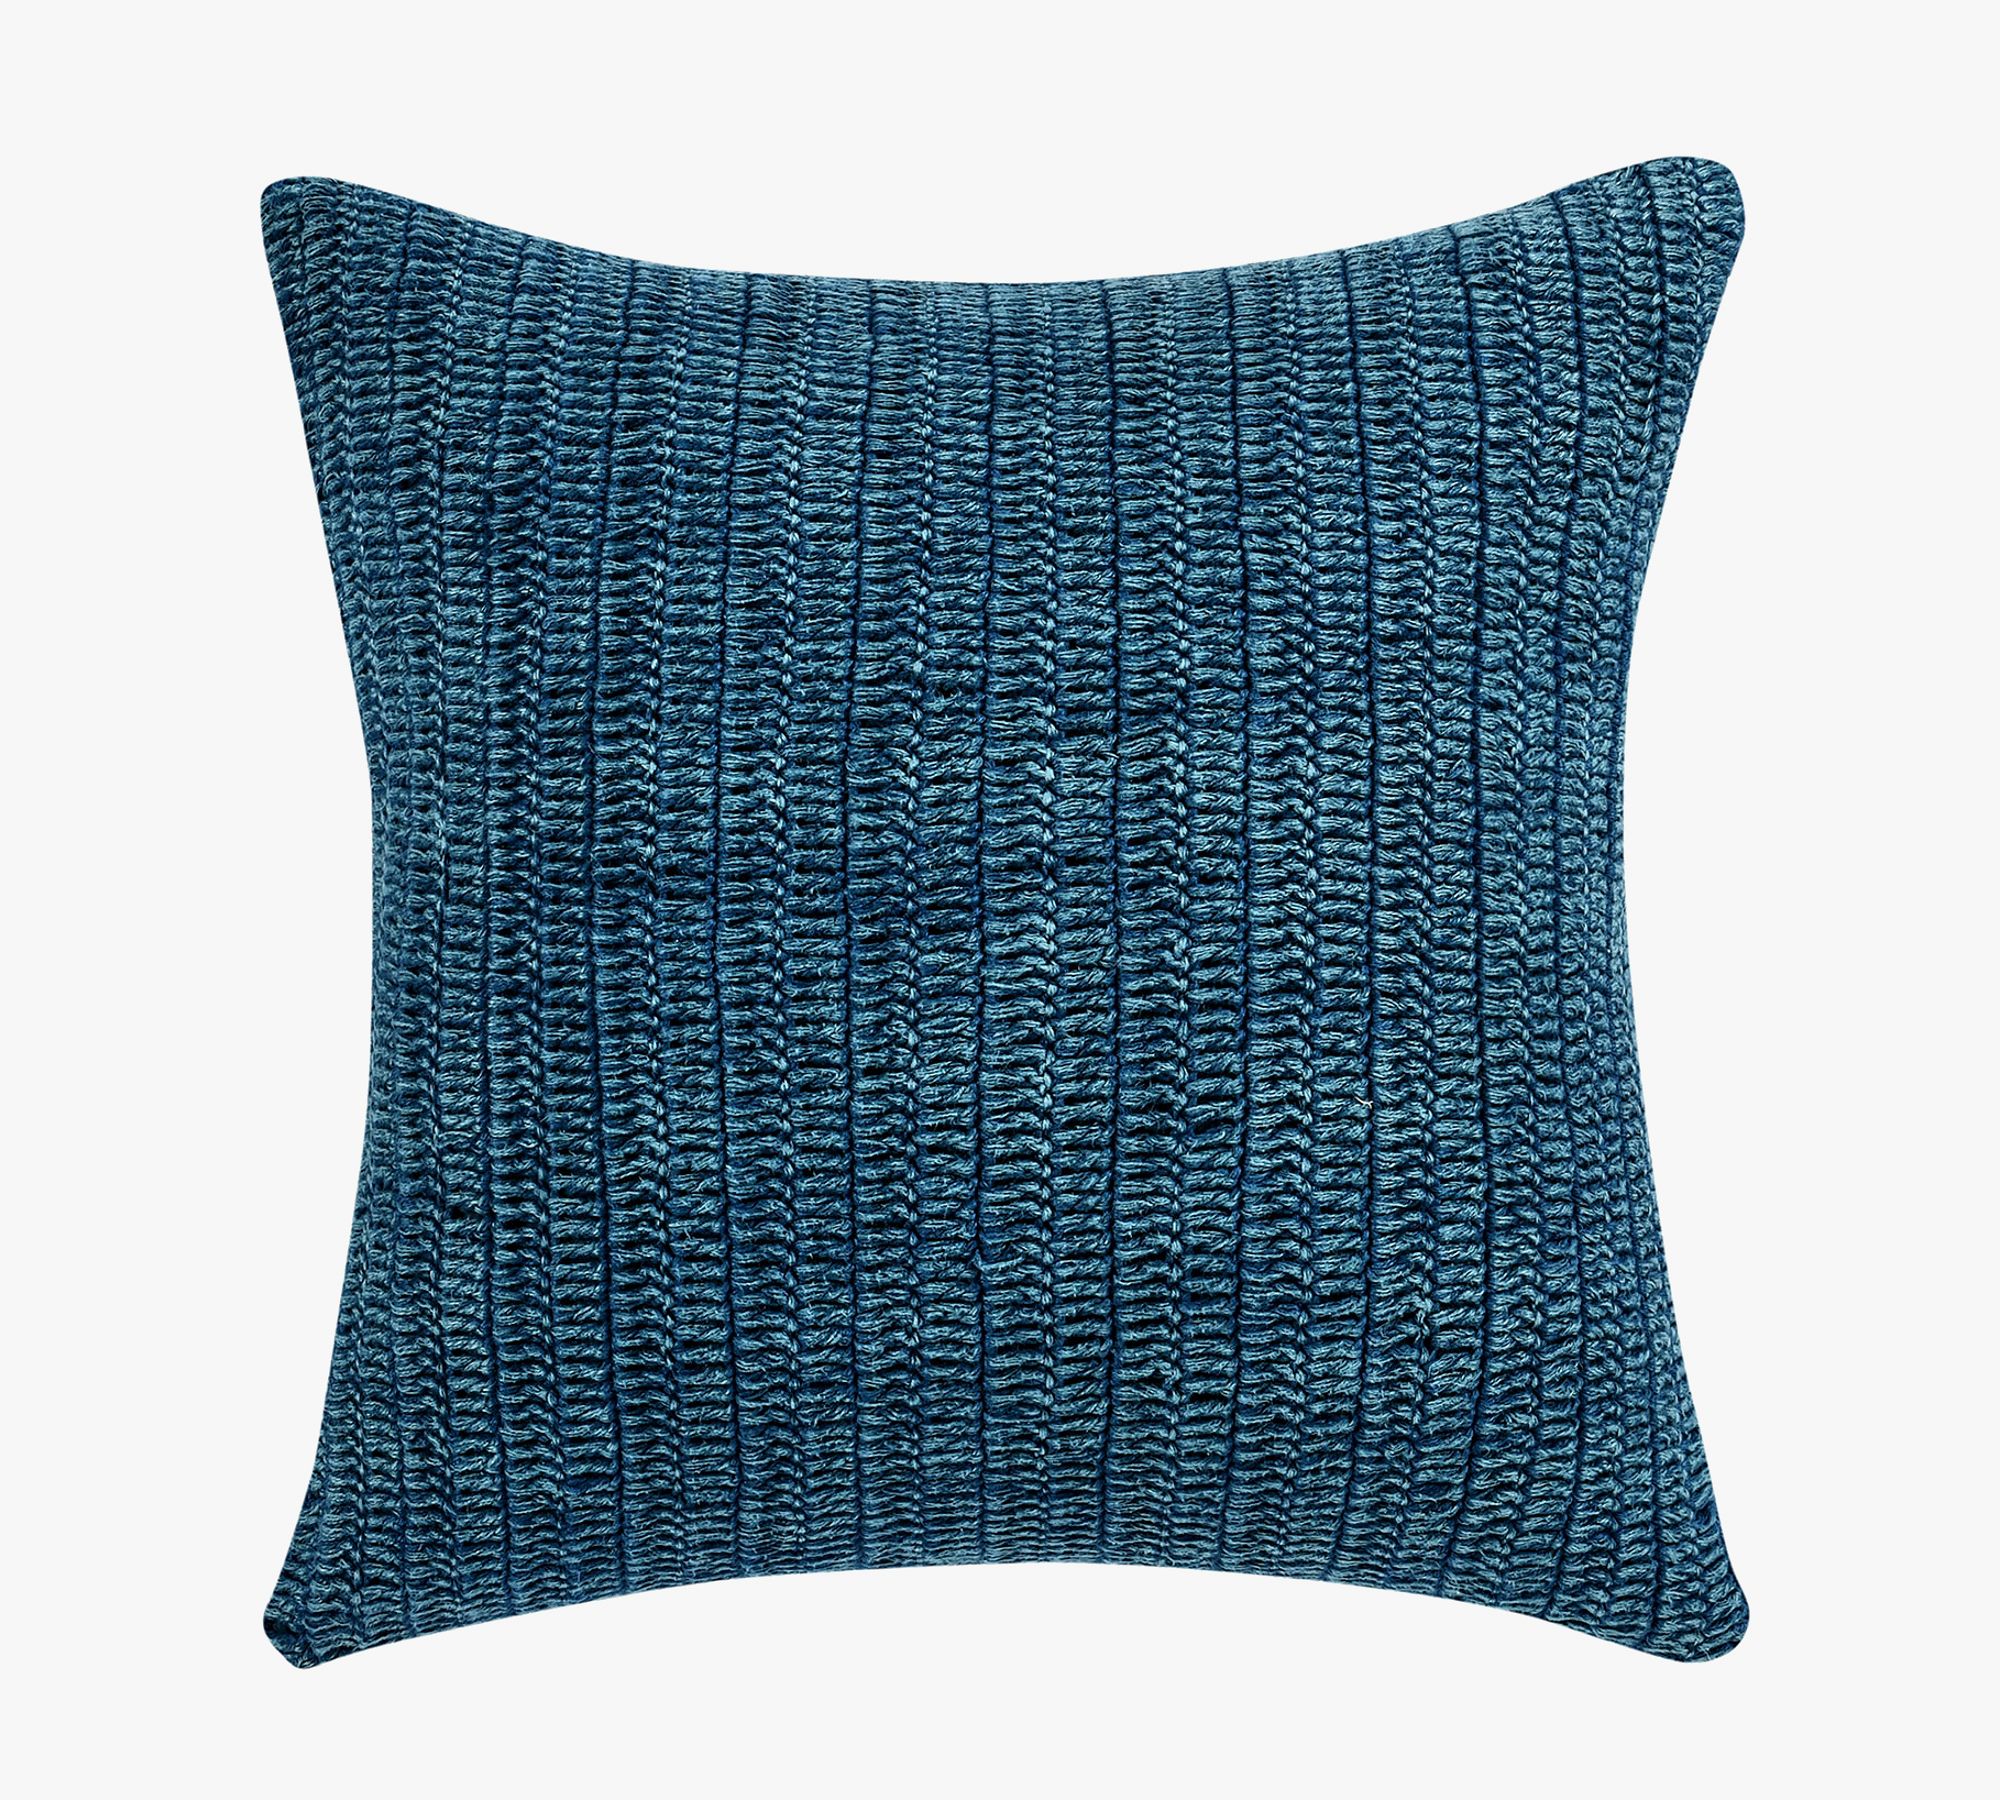 Olan Handknit Pillow Cover